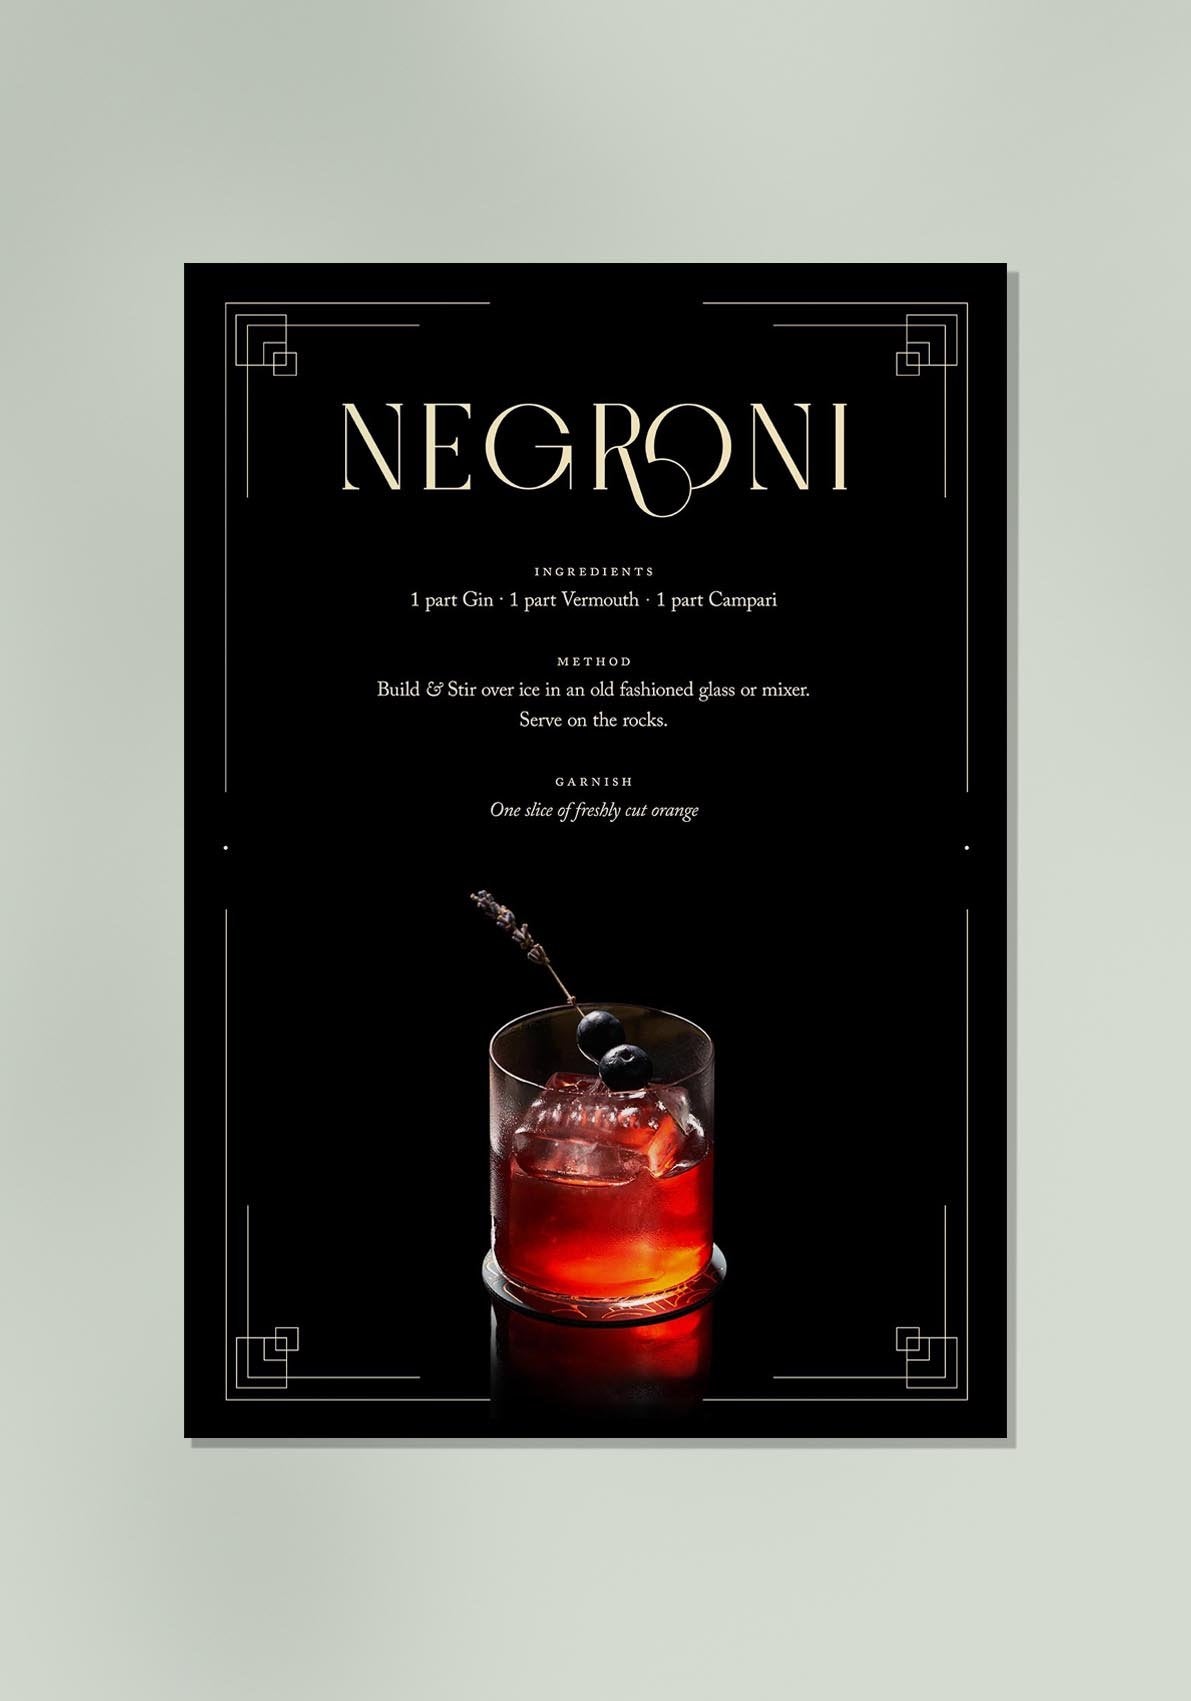 Negroni Cocktail Recipe Poster